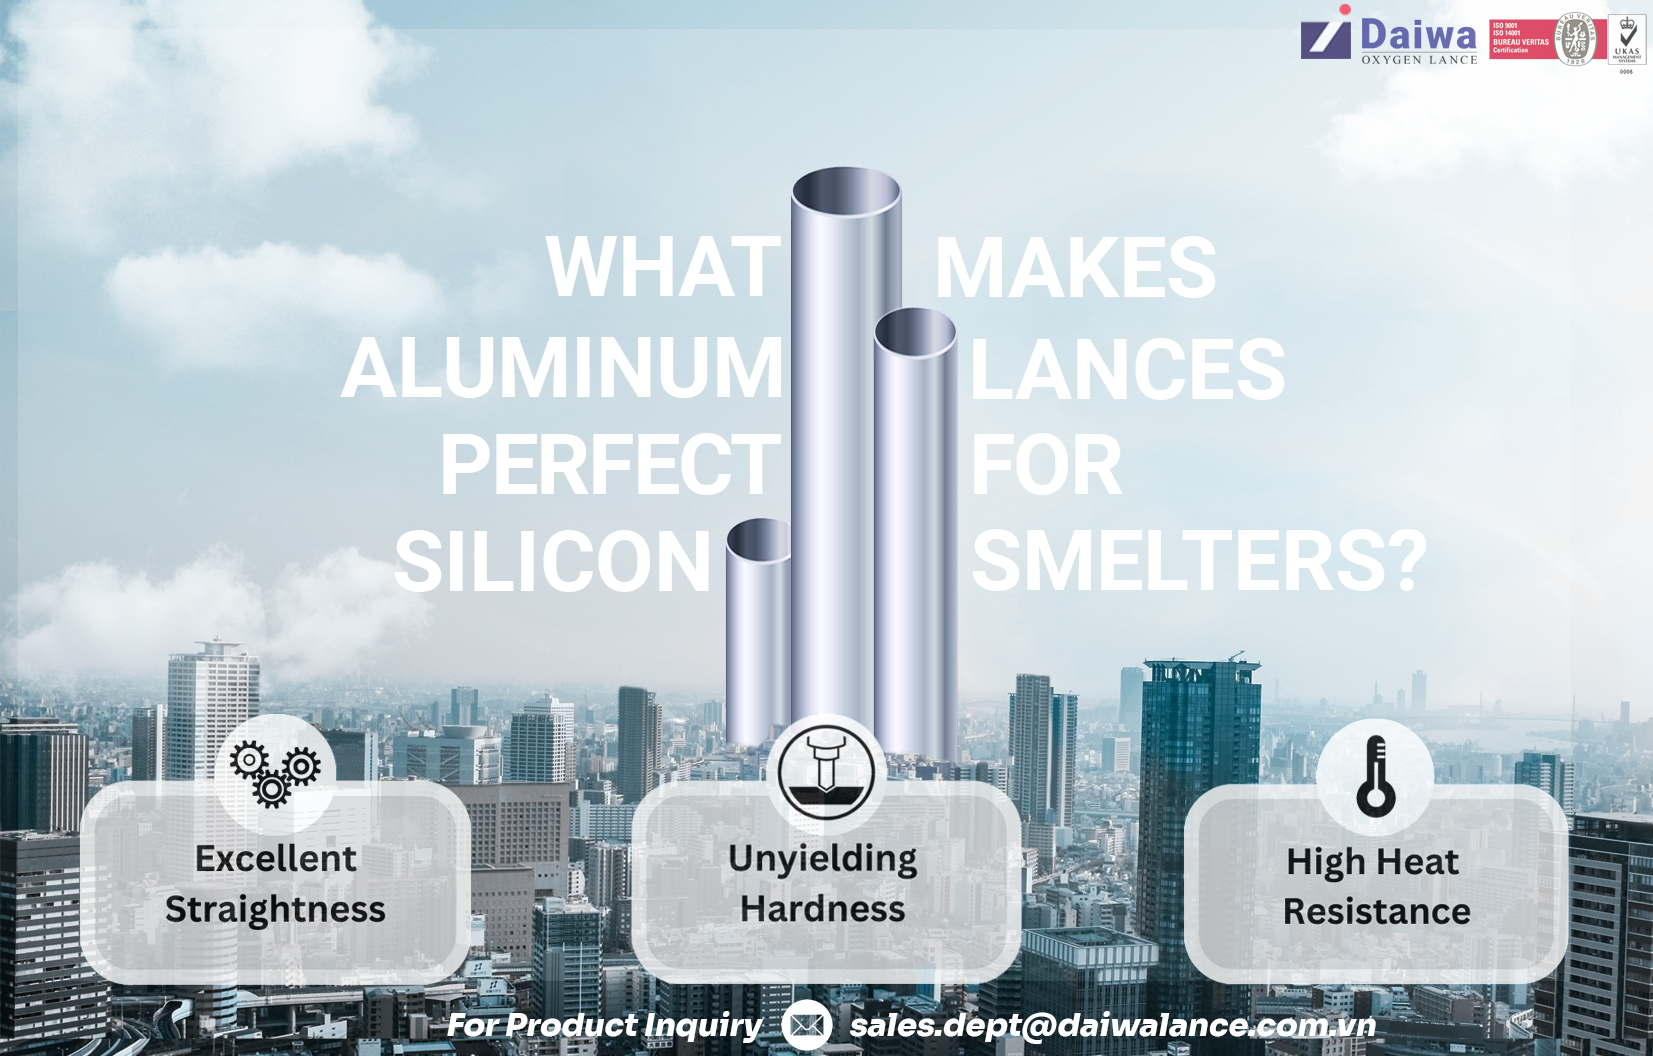 3 Unparalleled Advantages of Daiwa Aluminum Lance Pipes